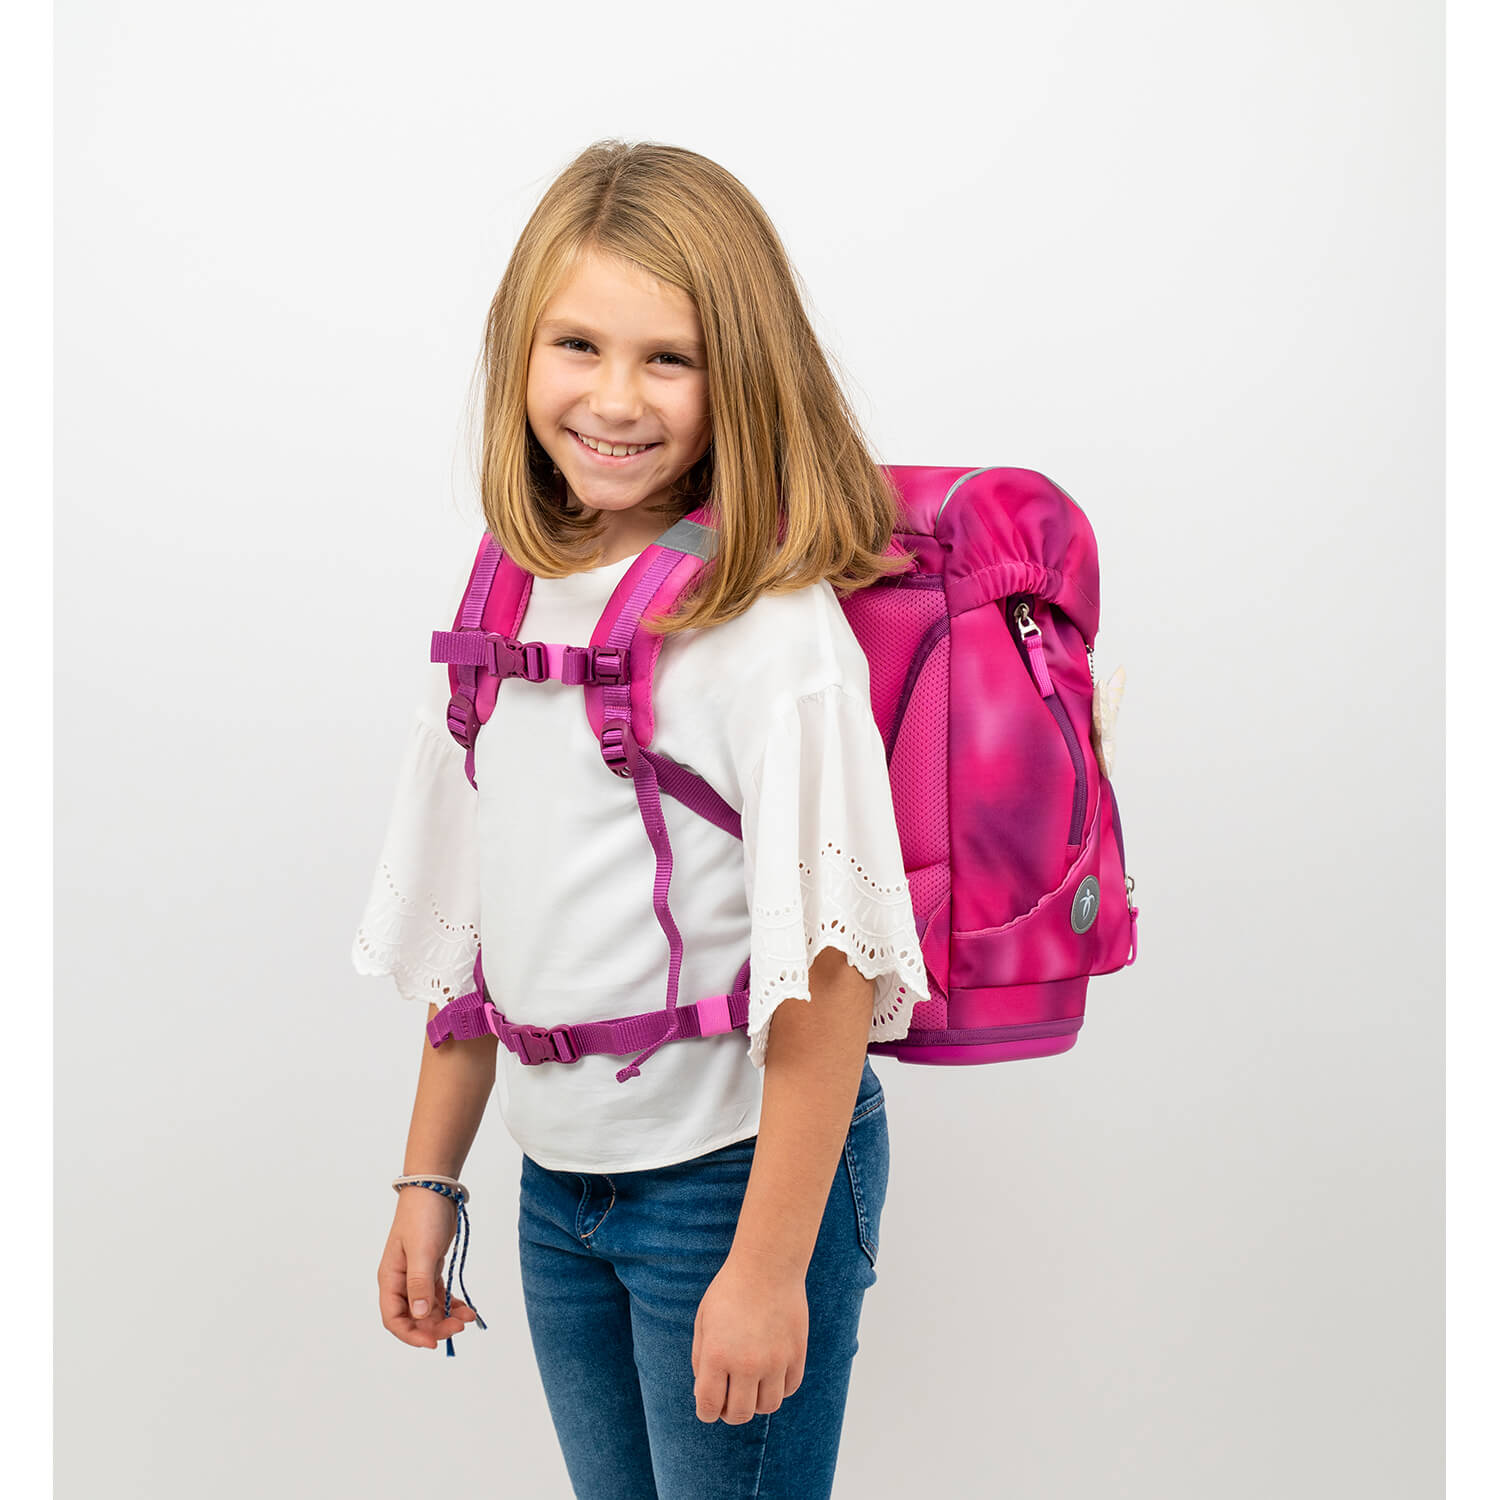 Motion Shiny Pink schoolbag set 6 pcs with GRATIS keychain